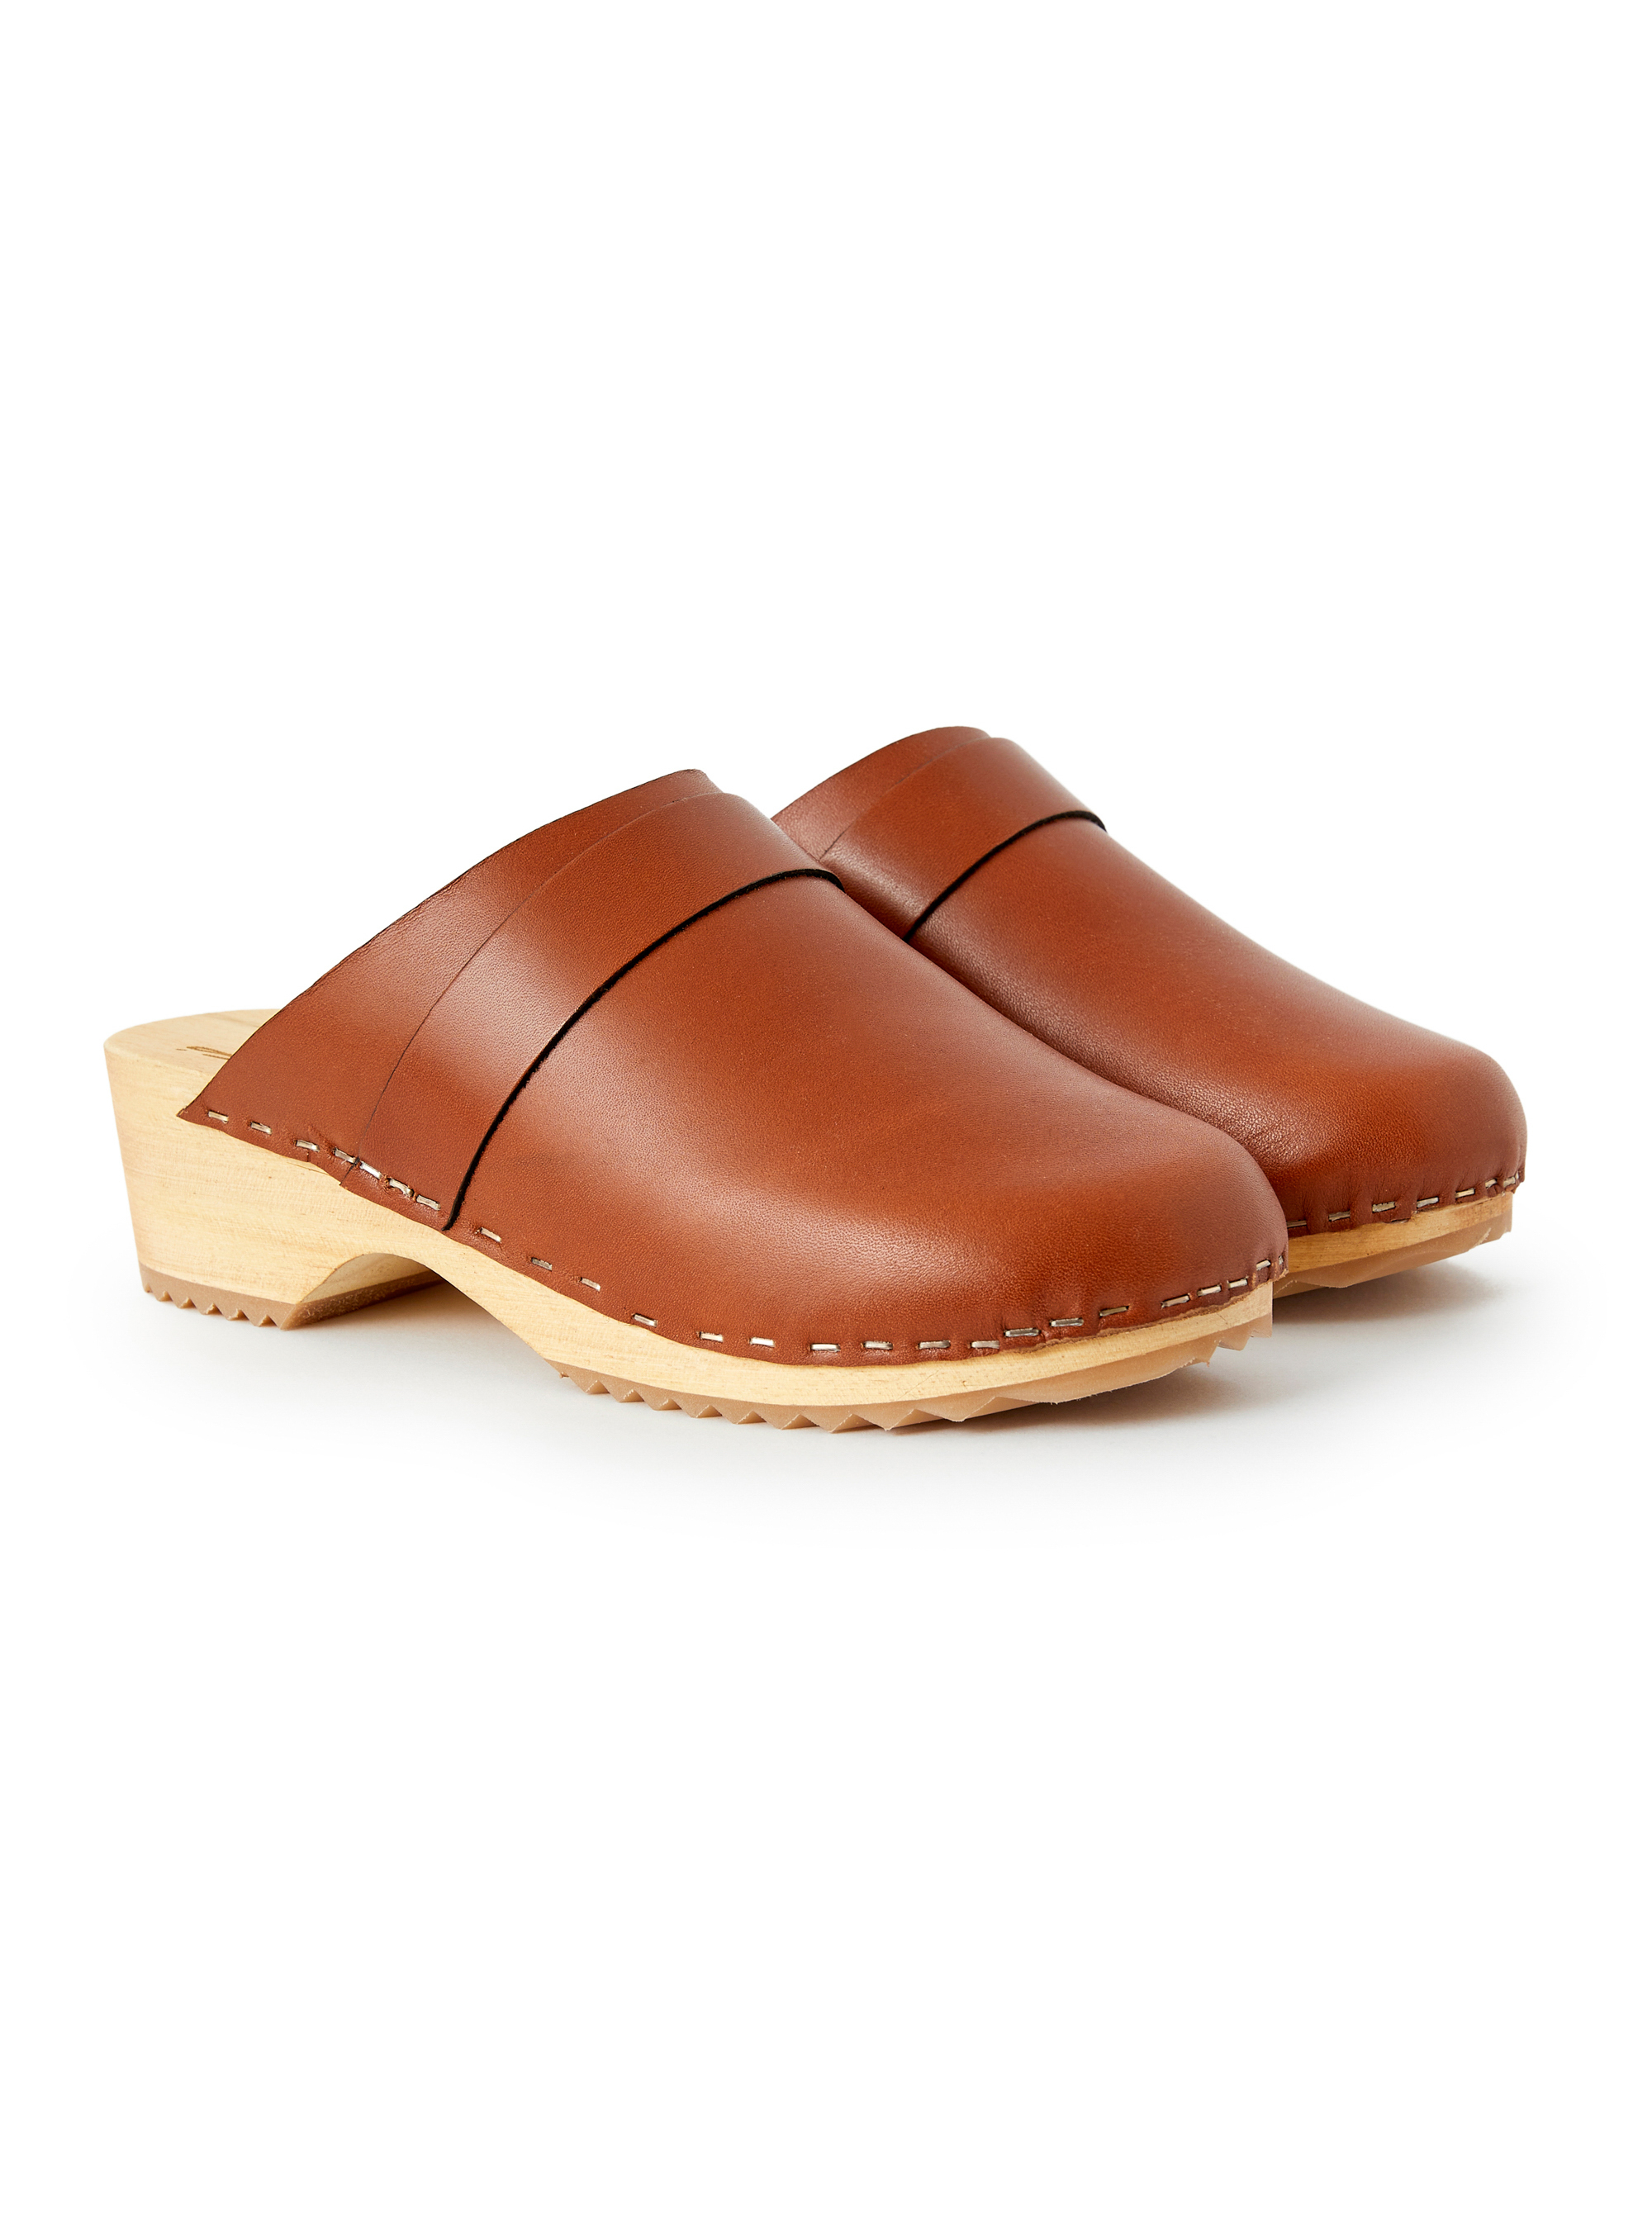 Sabots en cuir marrons - Chaussures - Il Gufo